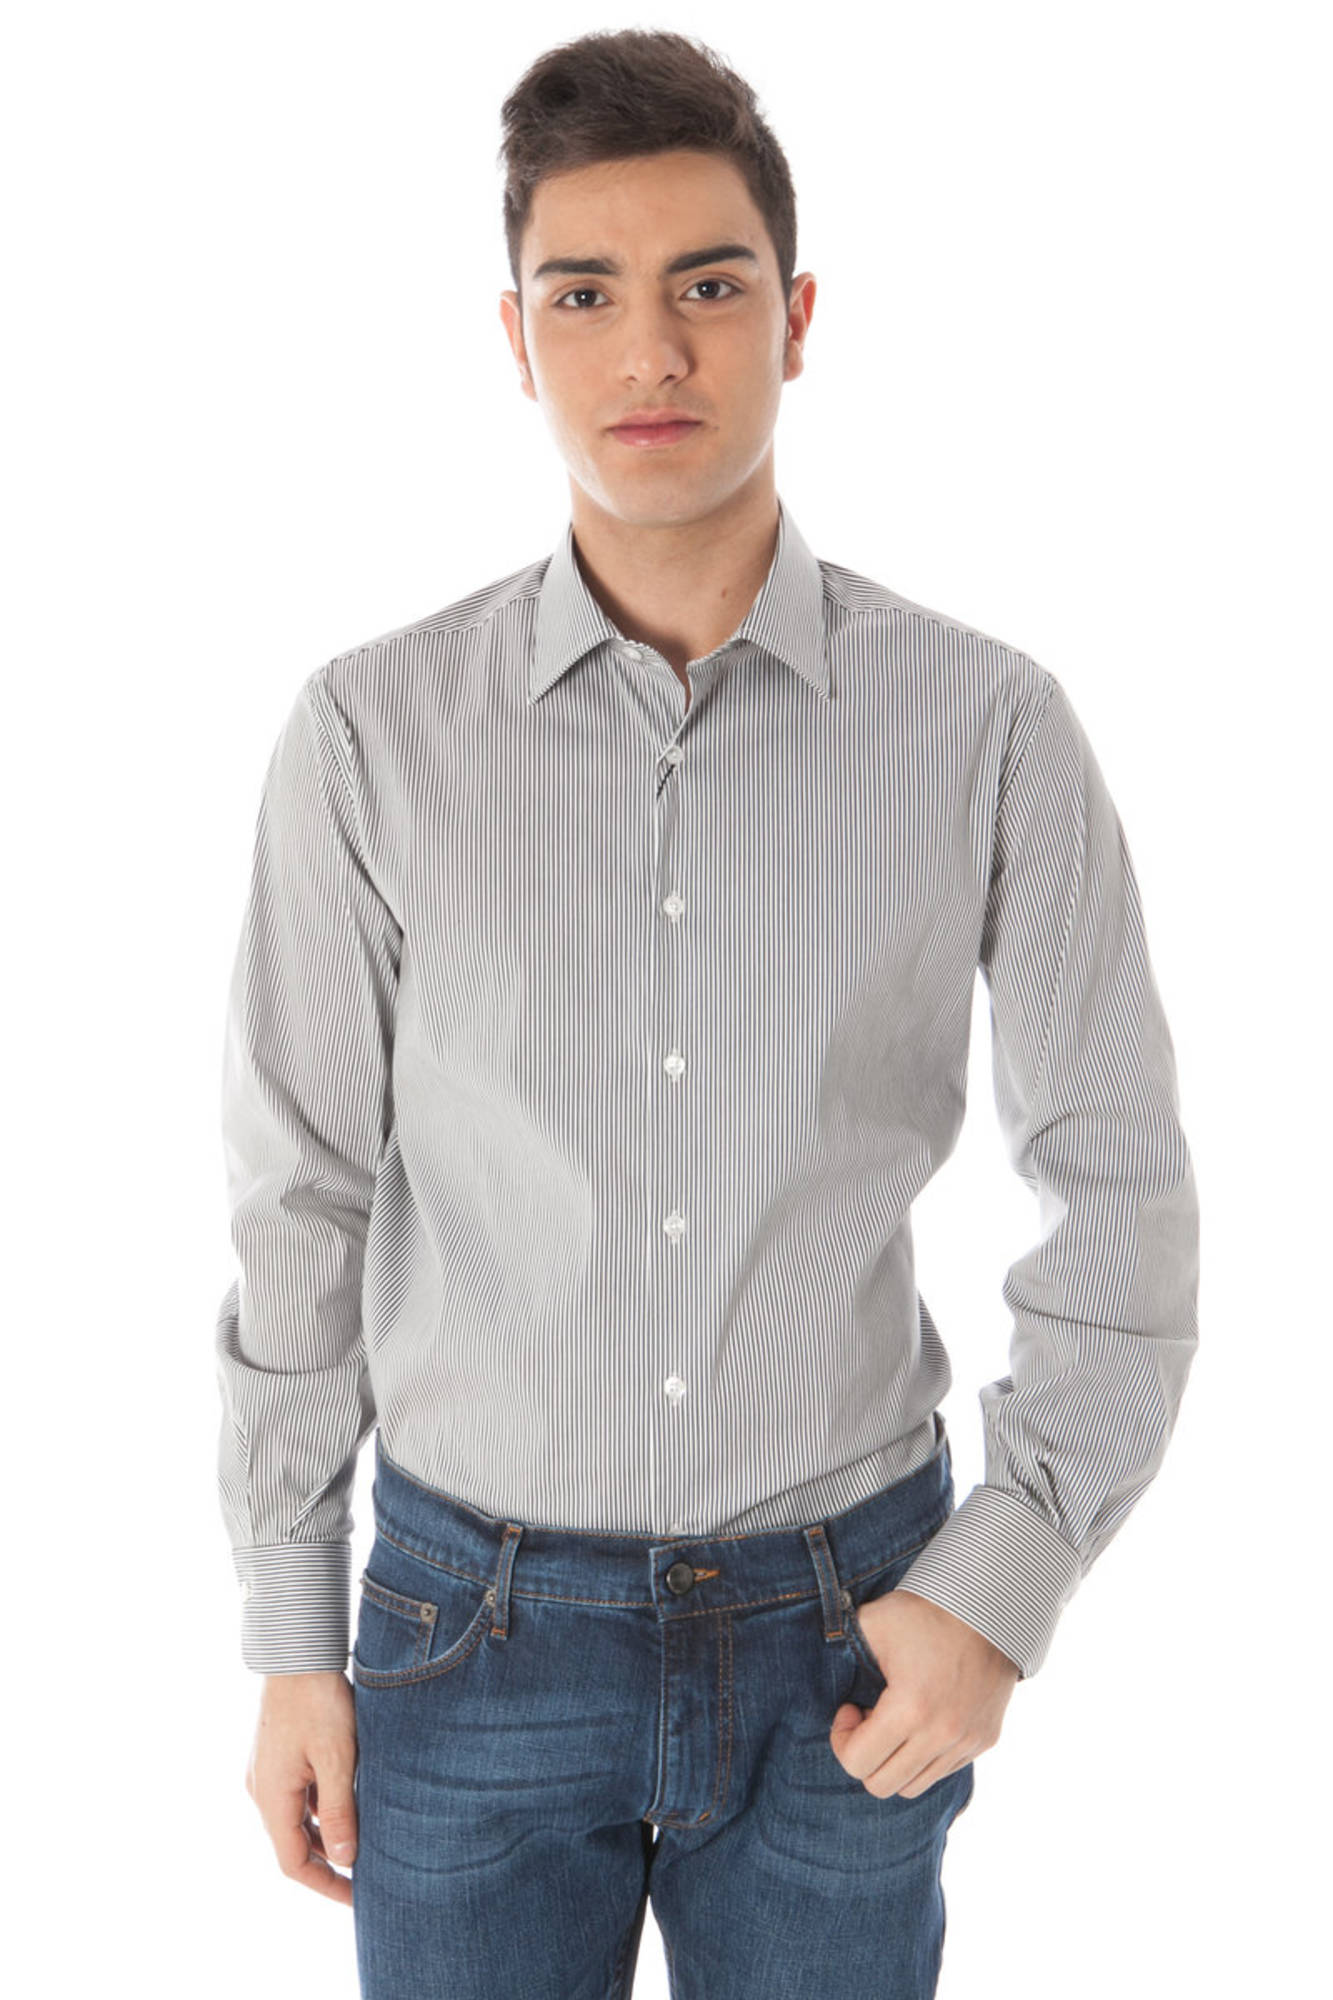 GIANFRANCO FERRÈ košile s dlouhým rukávem BIANCO